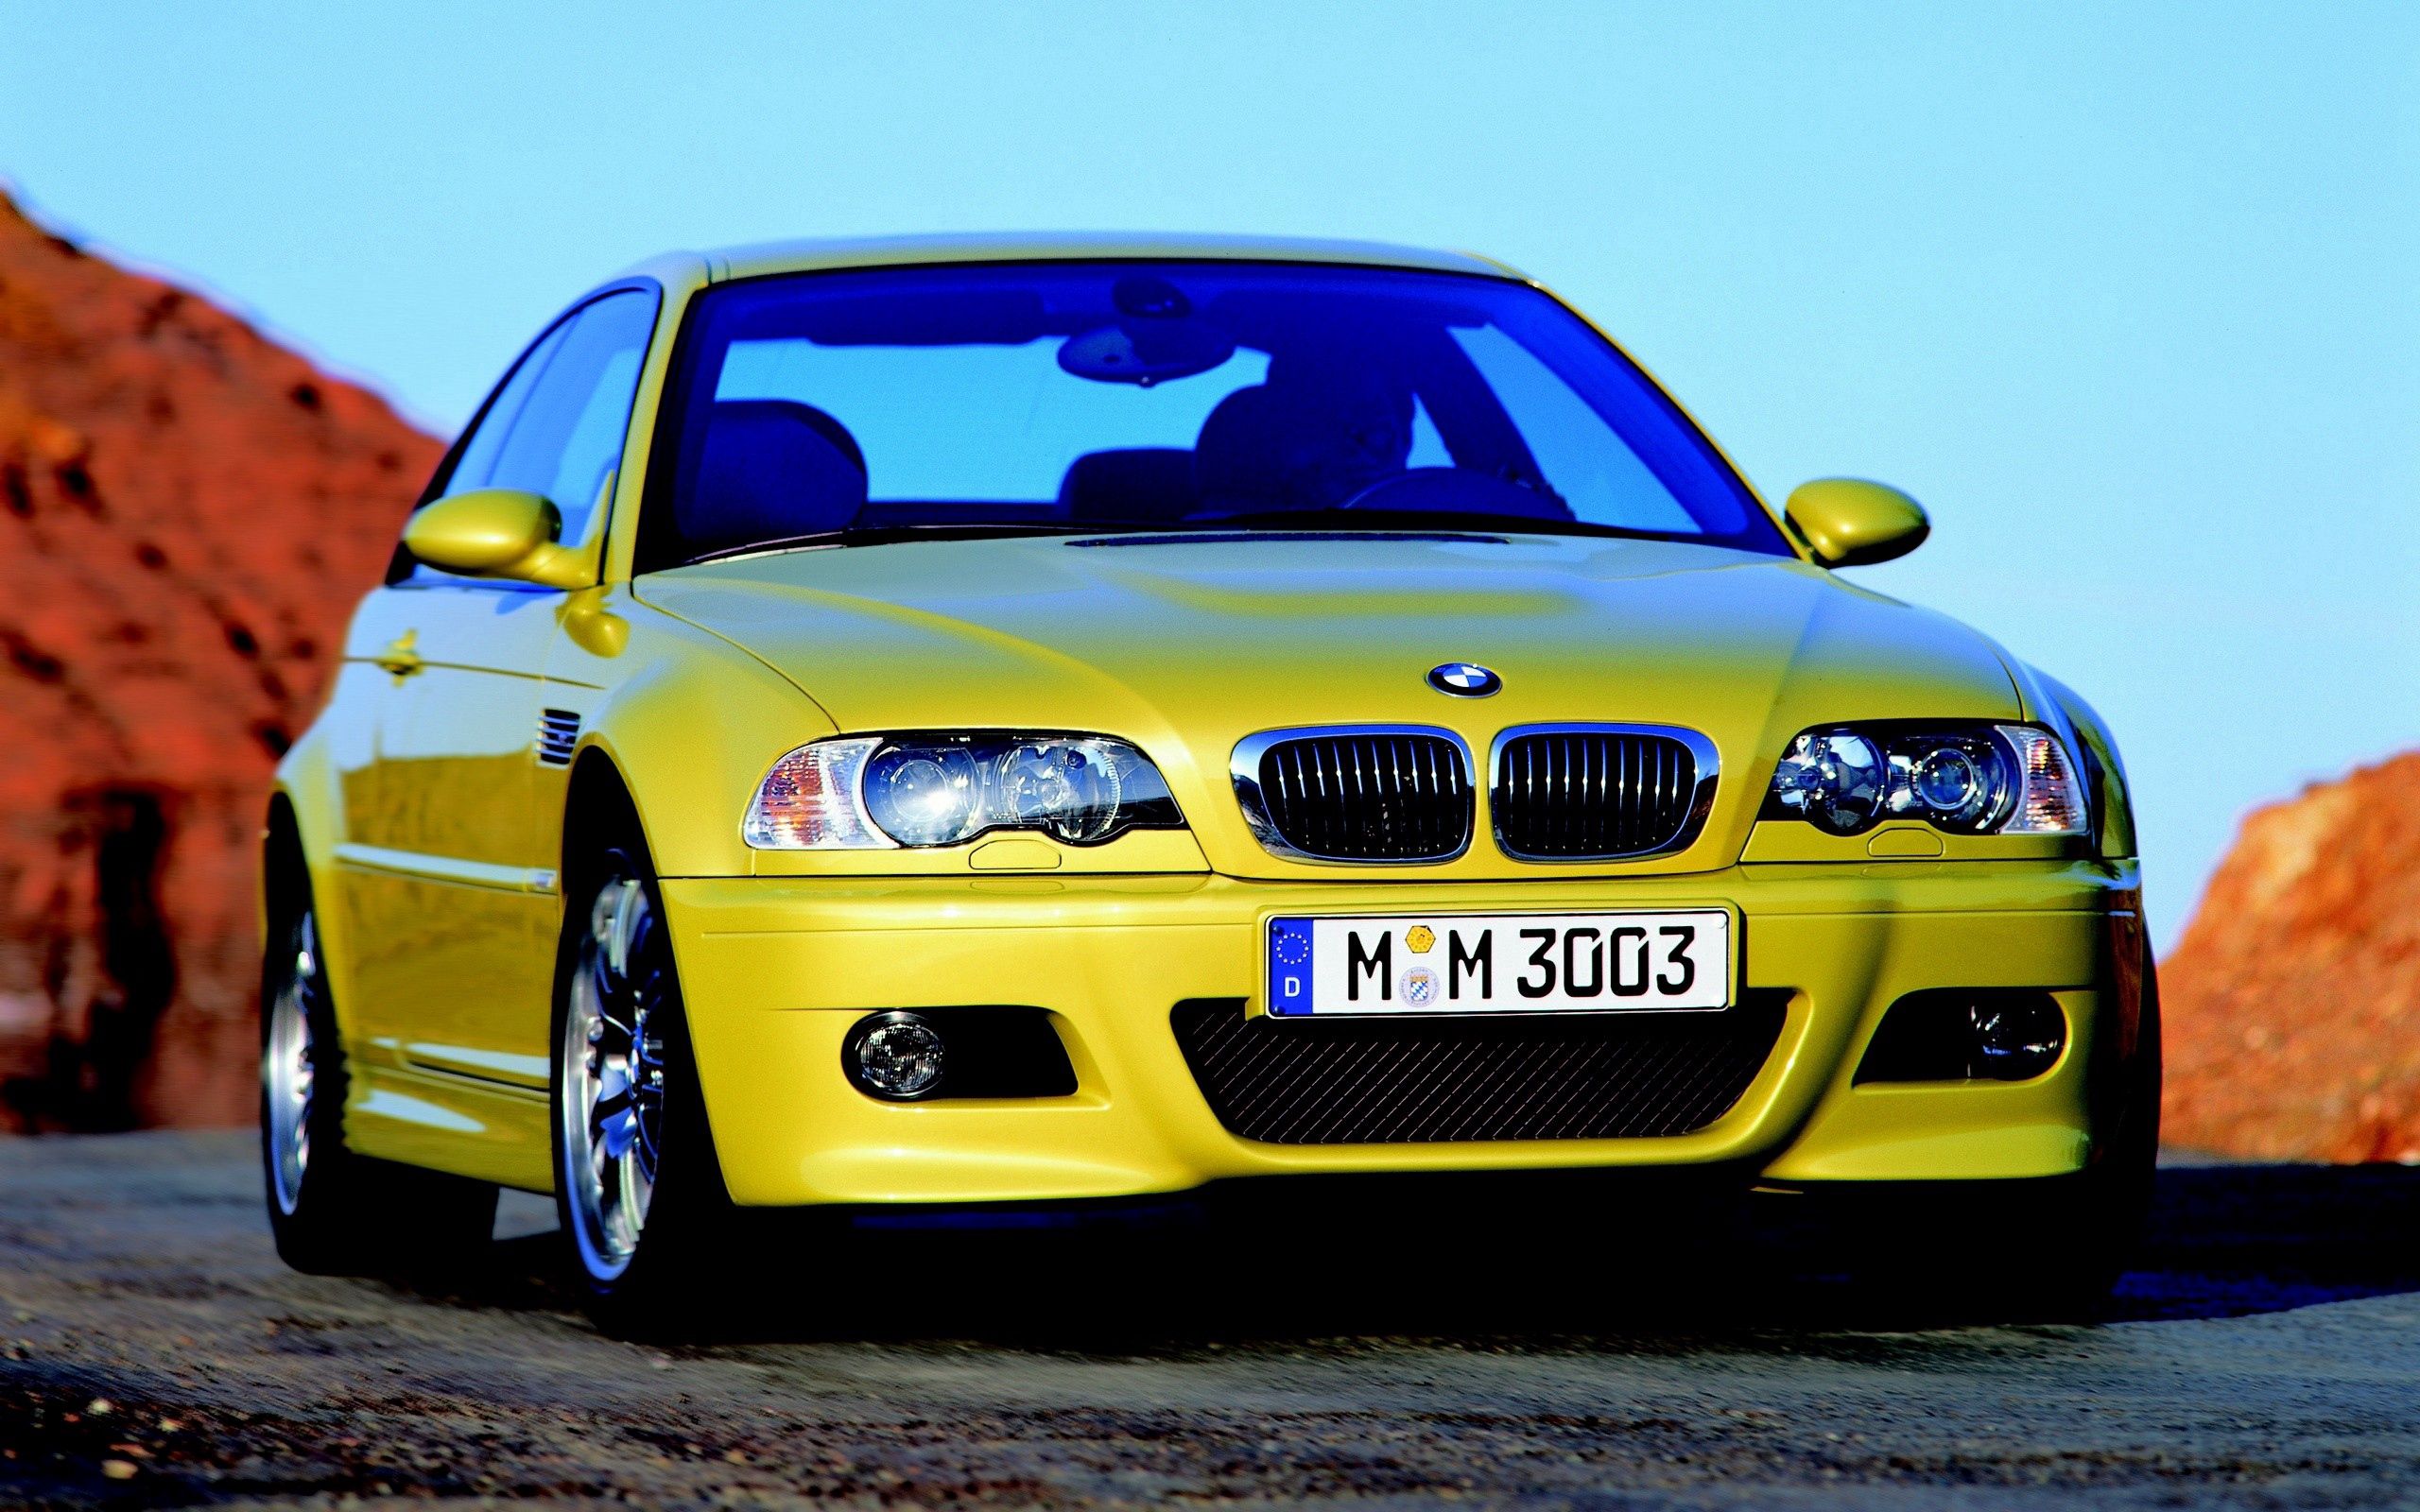 Три желтых машин. BMW m5 e39. БМВ 3003. Ряд желтых машин. Много желтых машин.